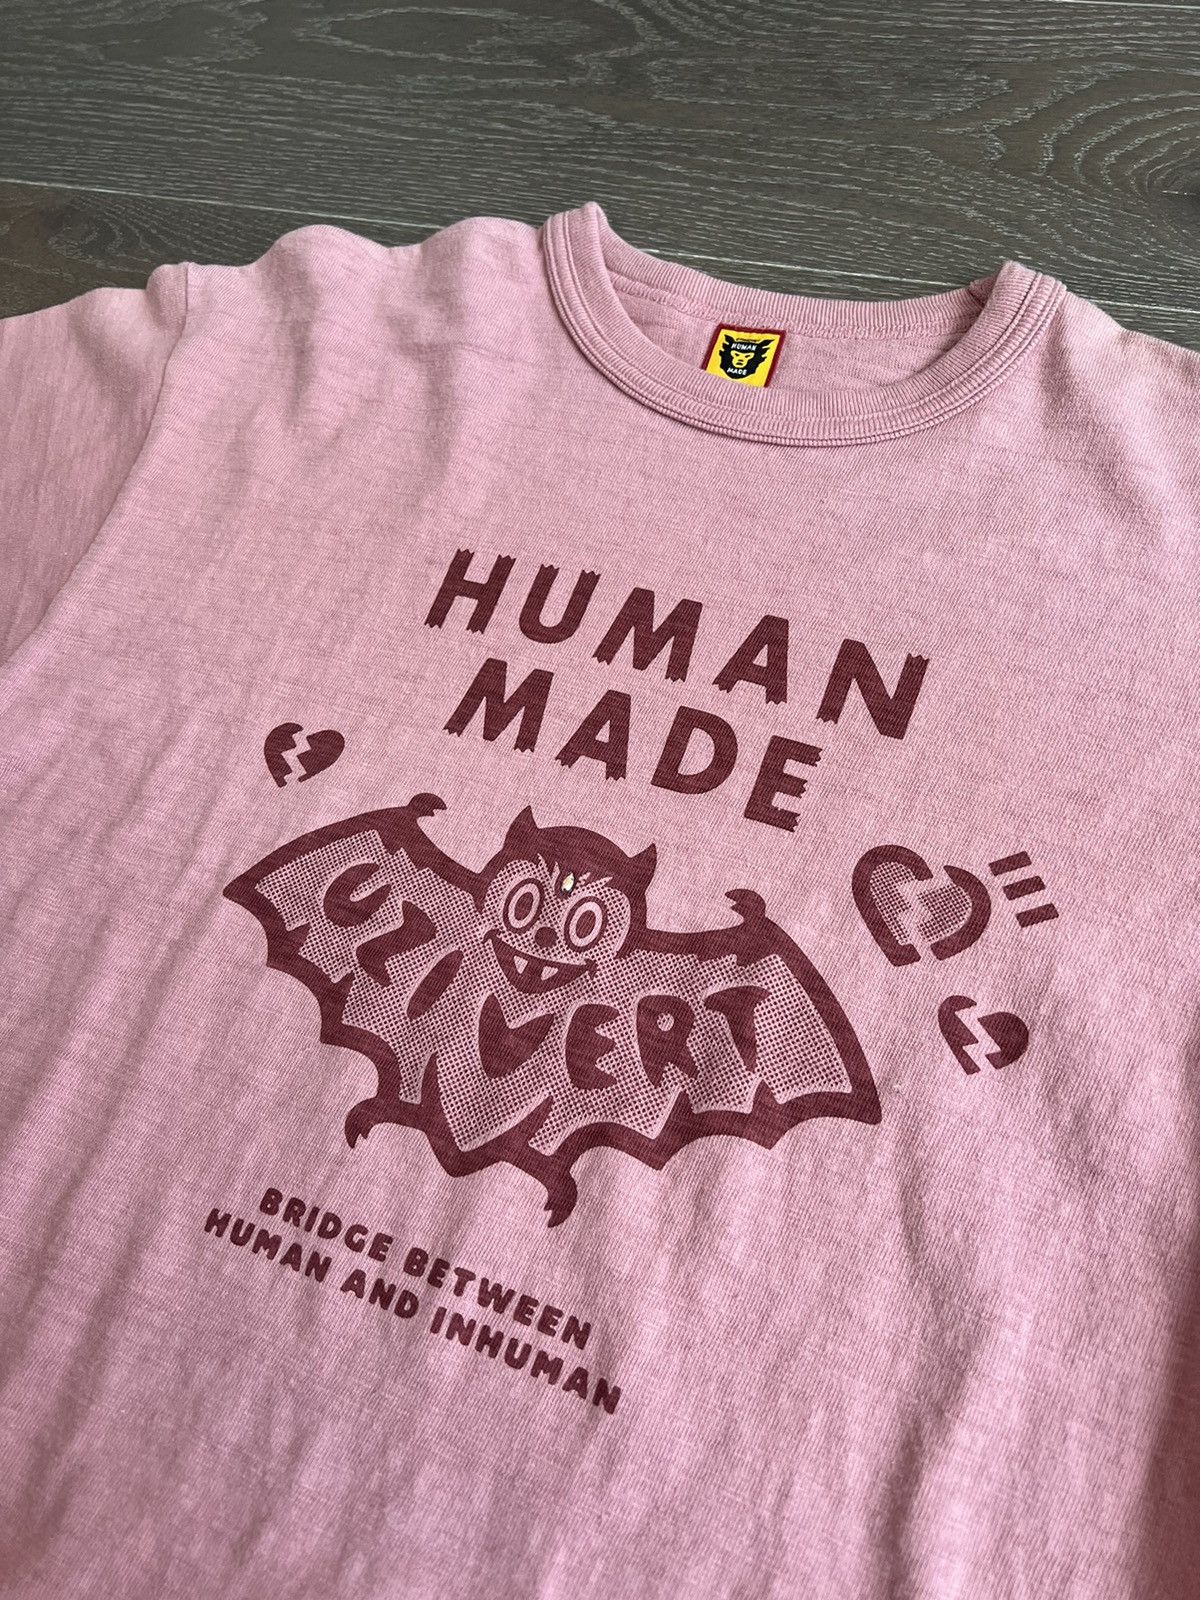 Human Made Lil Uzi Vert Graphic T-shirt | Grailed